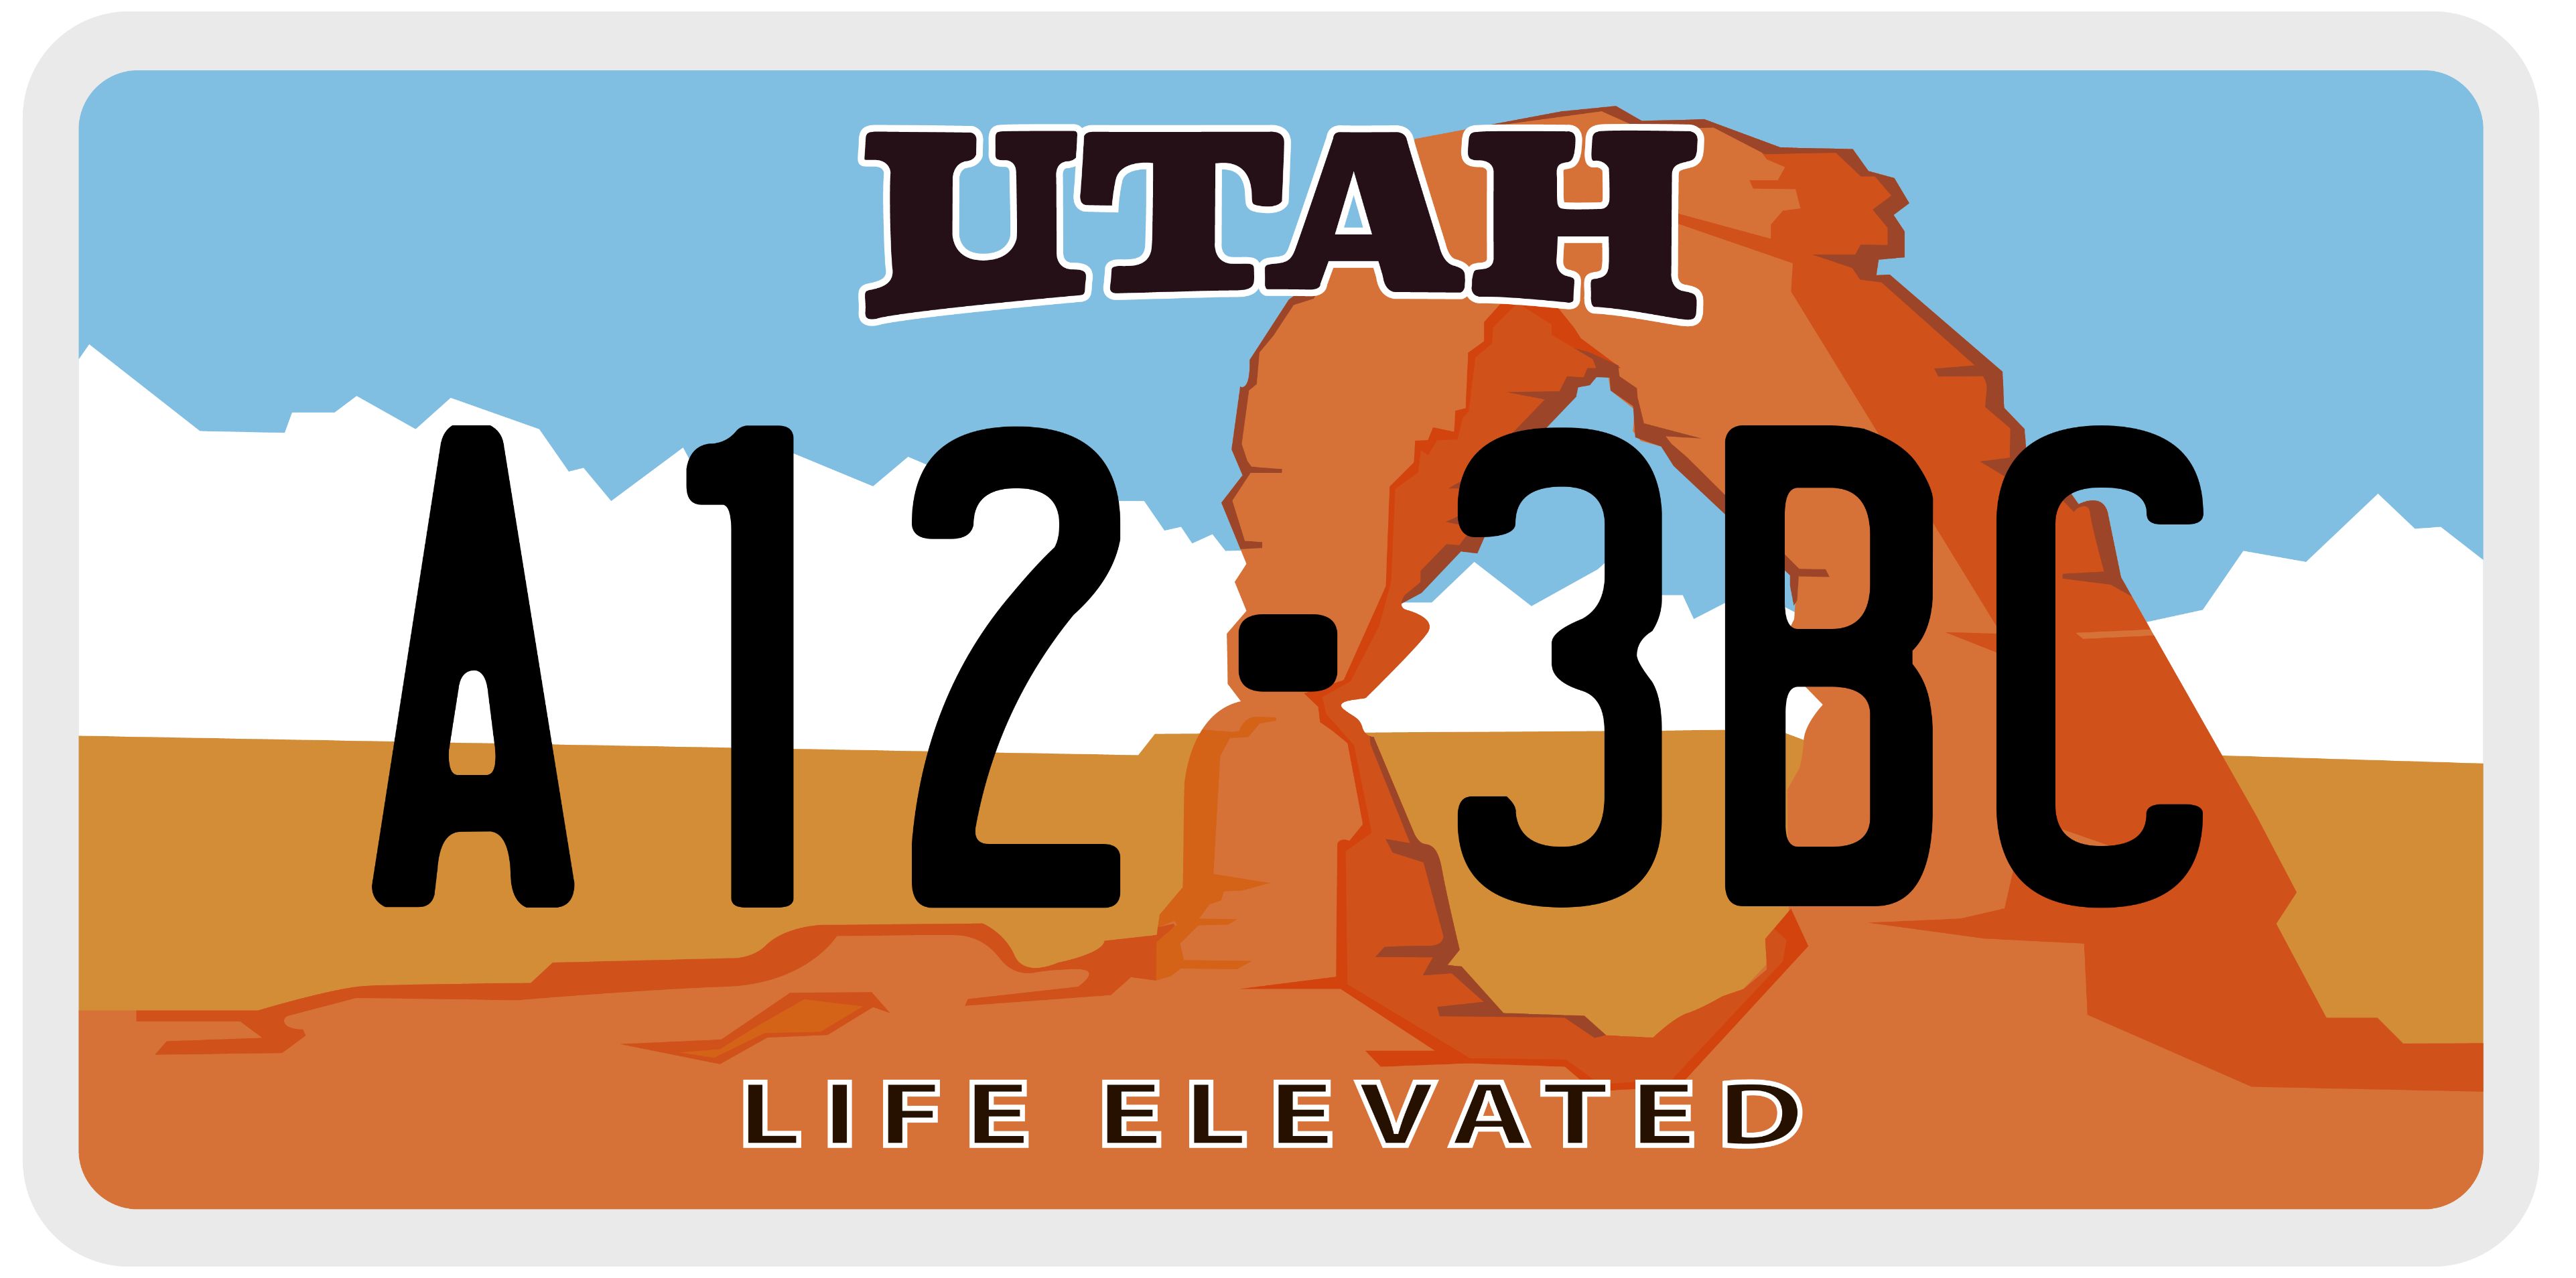 what does an utah license plate look like